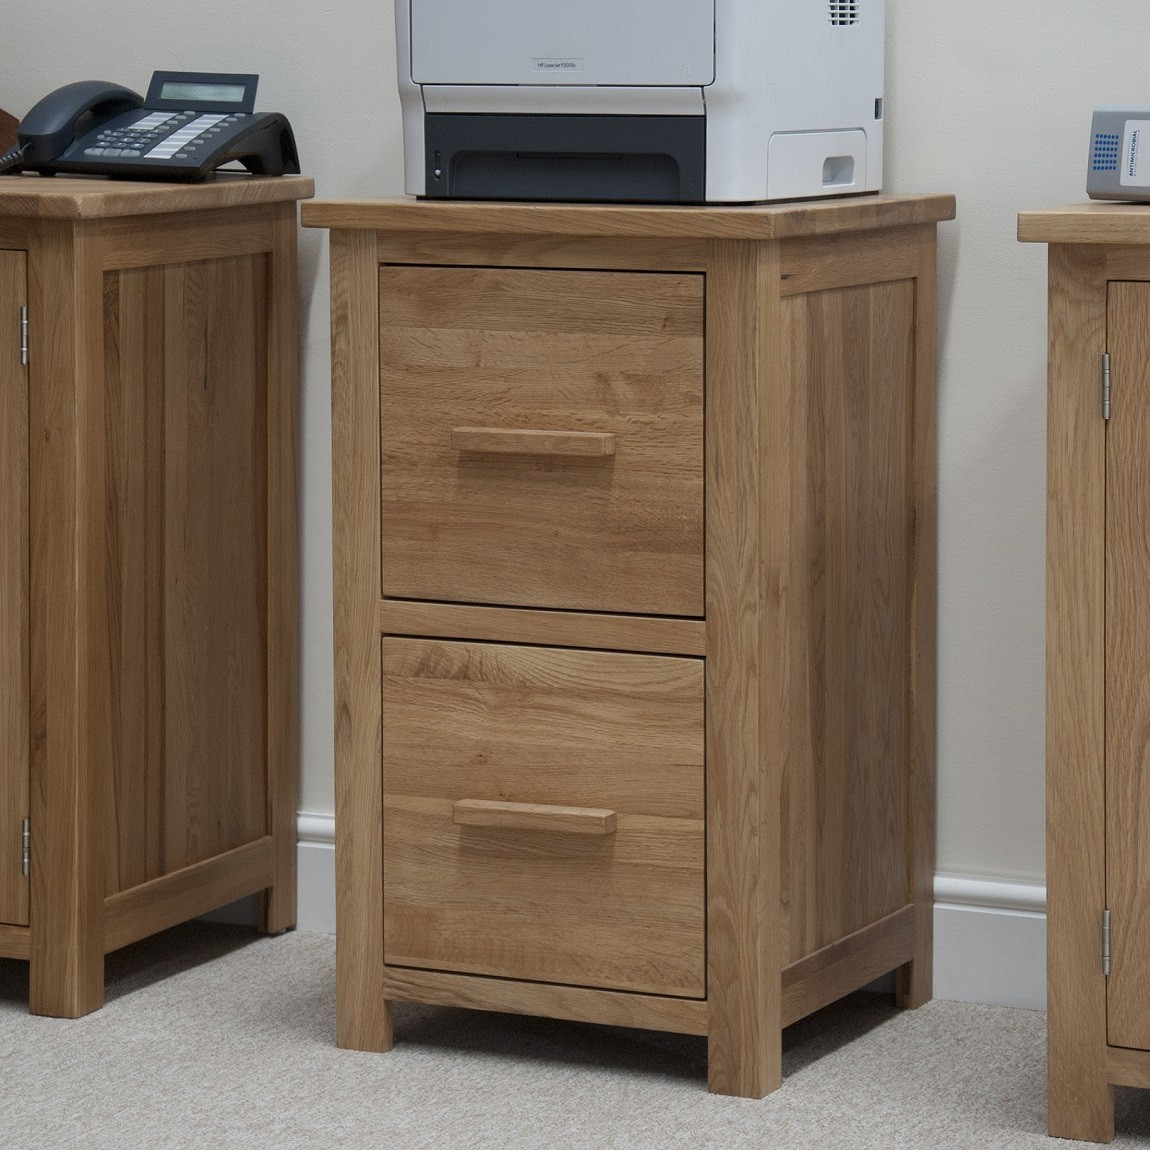 Opus Solid Oak Filing Cabinet Oak Furniture Uk regarding measurements 1150 X 1150